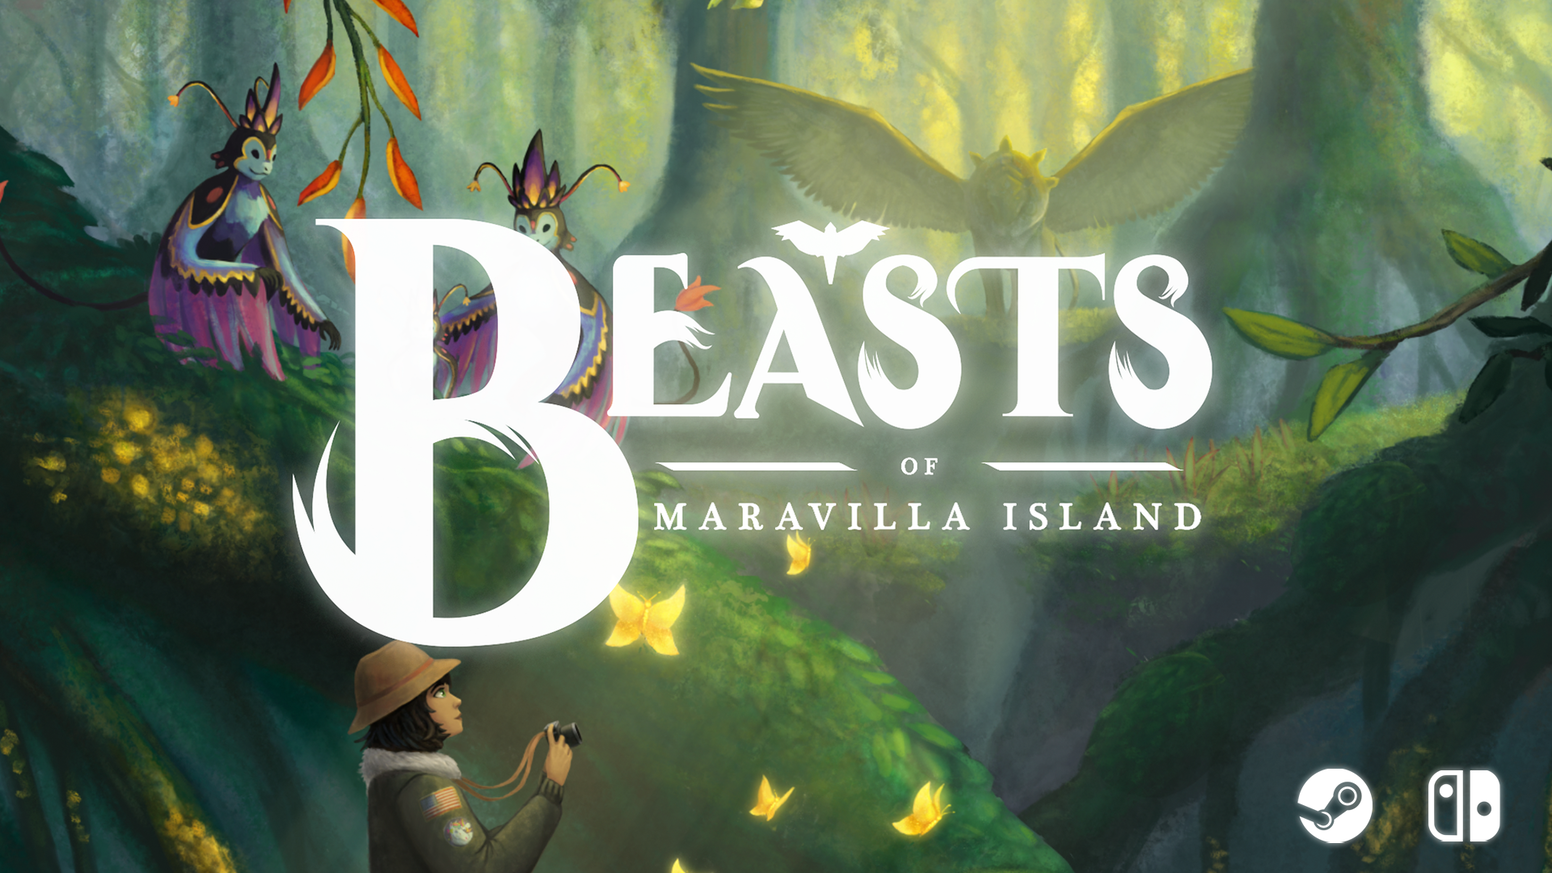 the beasts of maravilla island